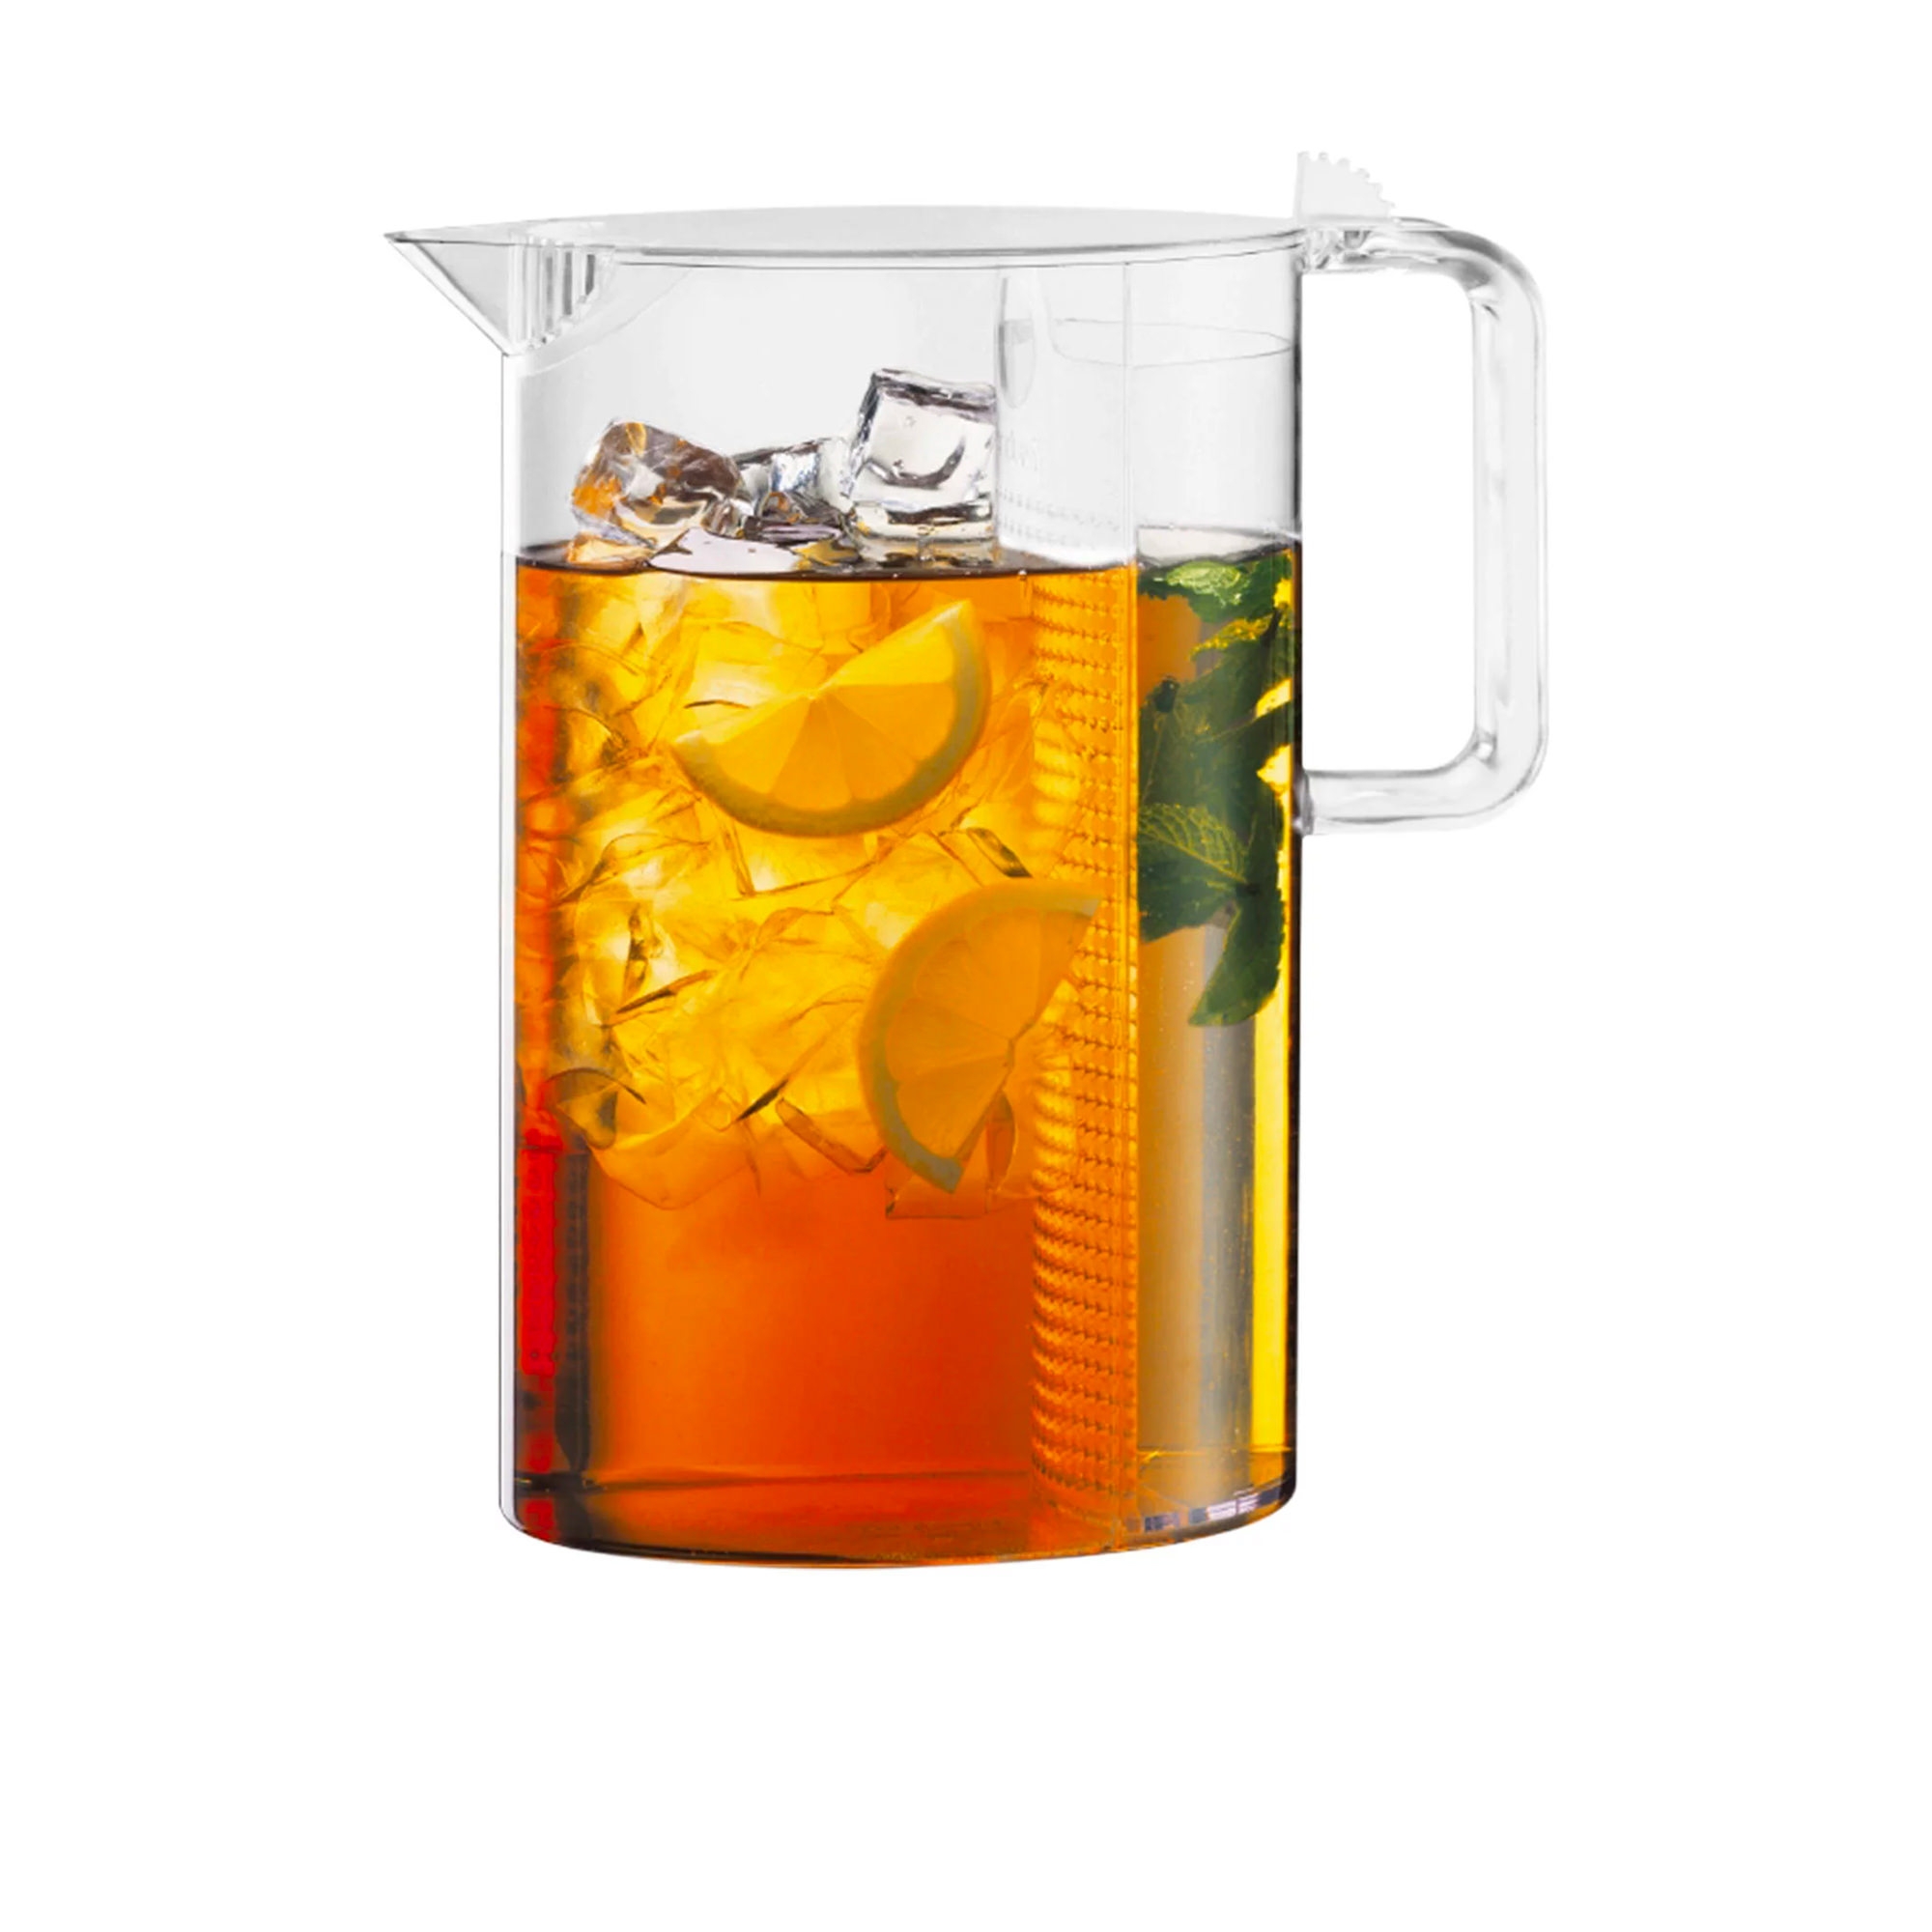 Bodum Ceylon Ice Tea Jug with Filter 1.5L Image 1